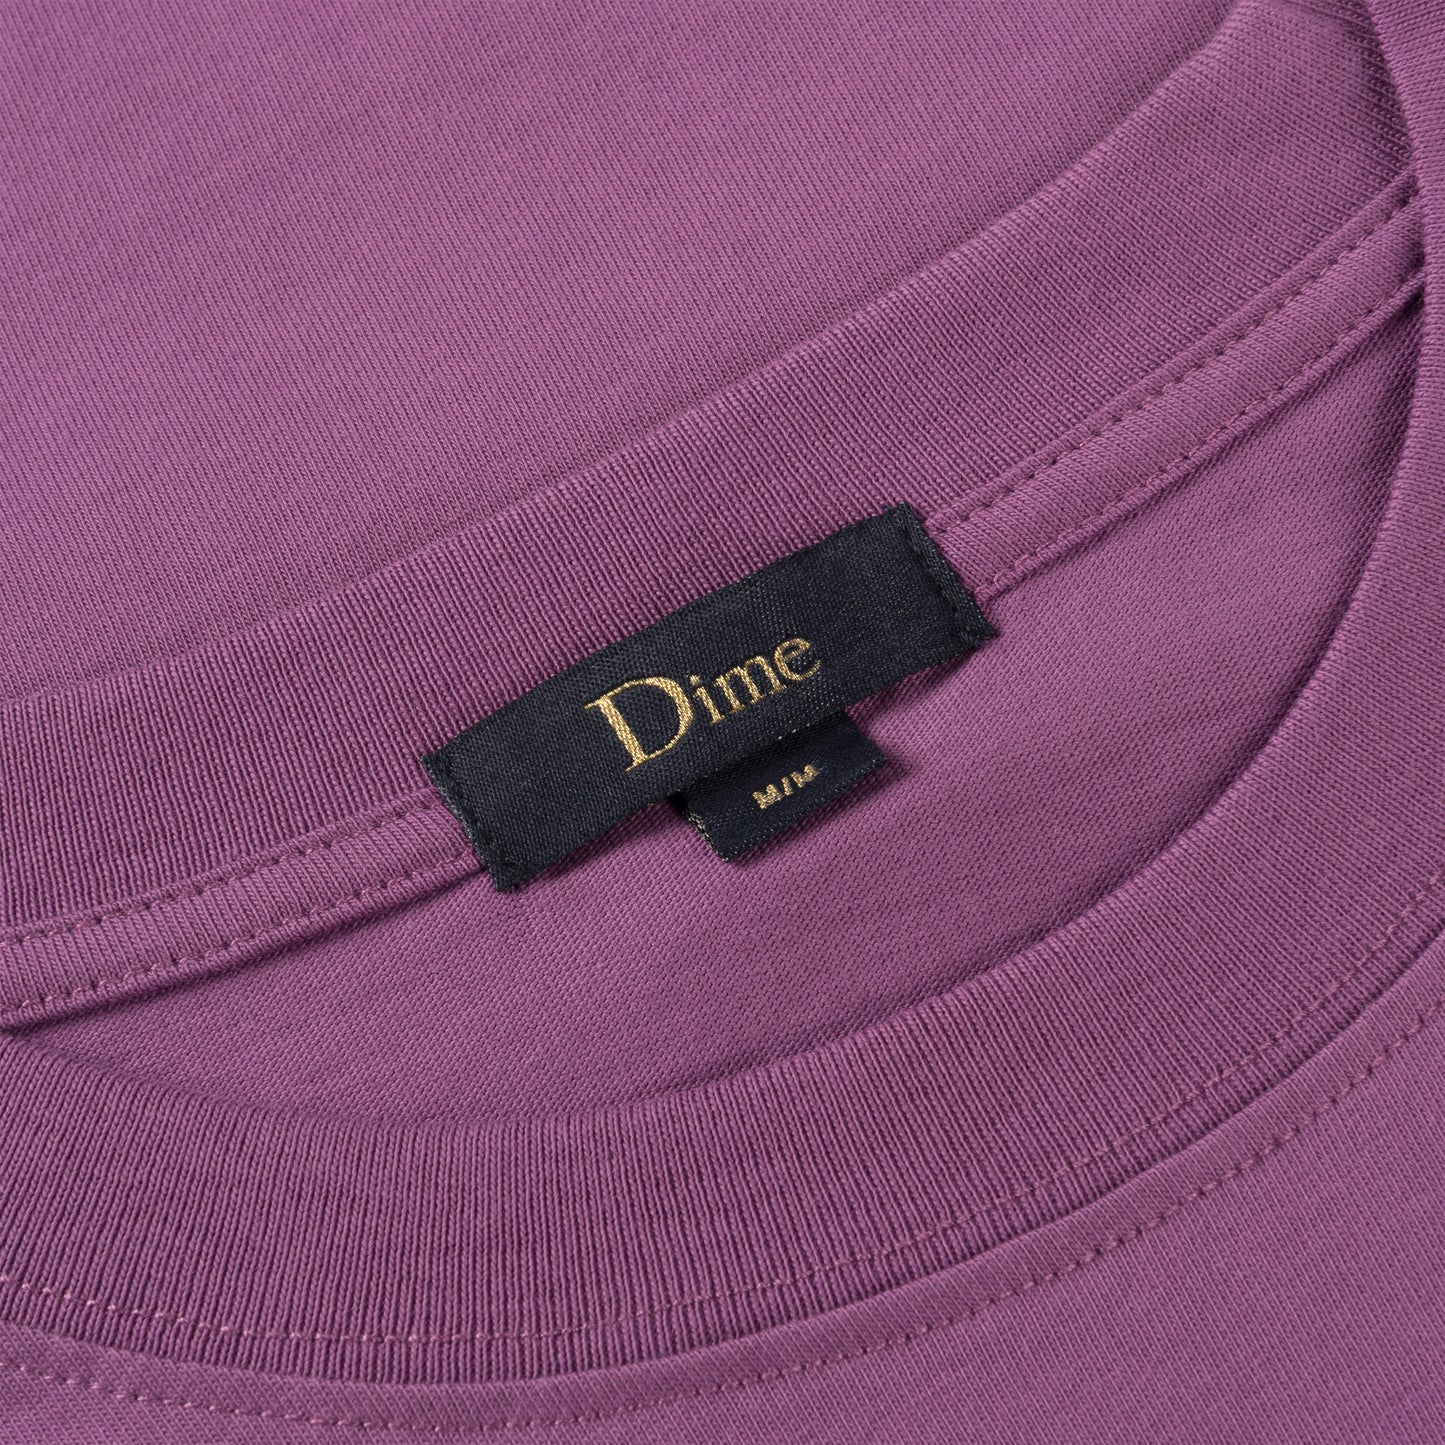 Dime - Collage T-Shirt - Violet